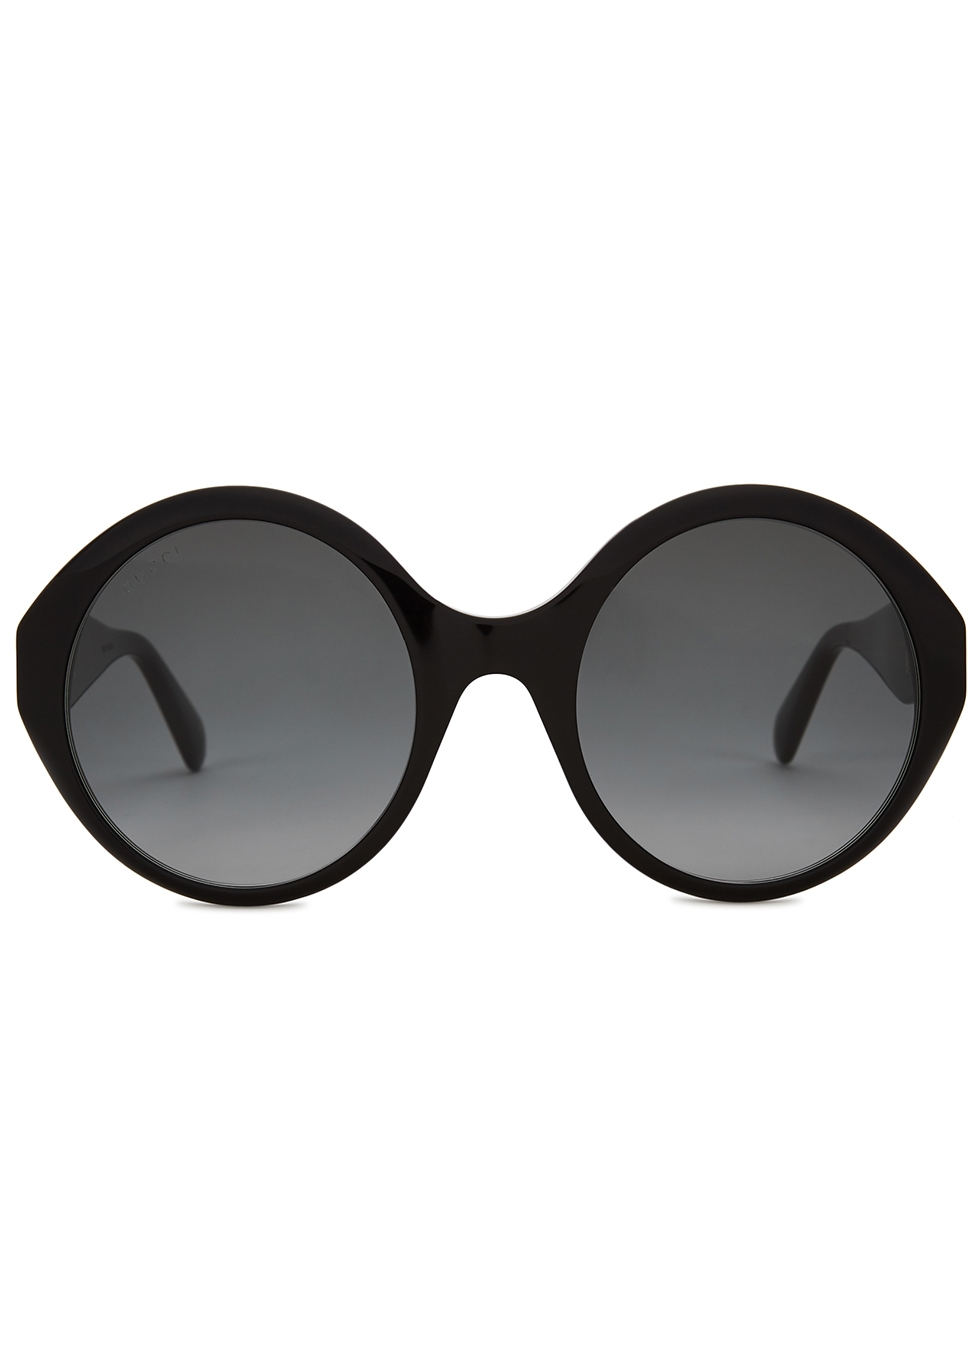 gucci black round frame sunglasses